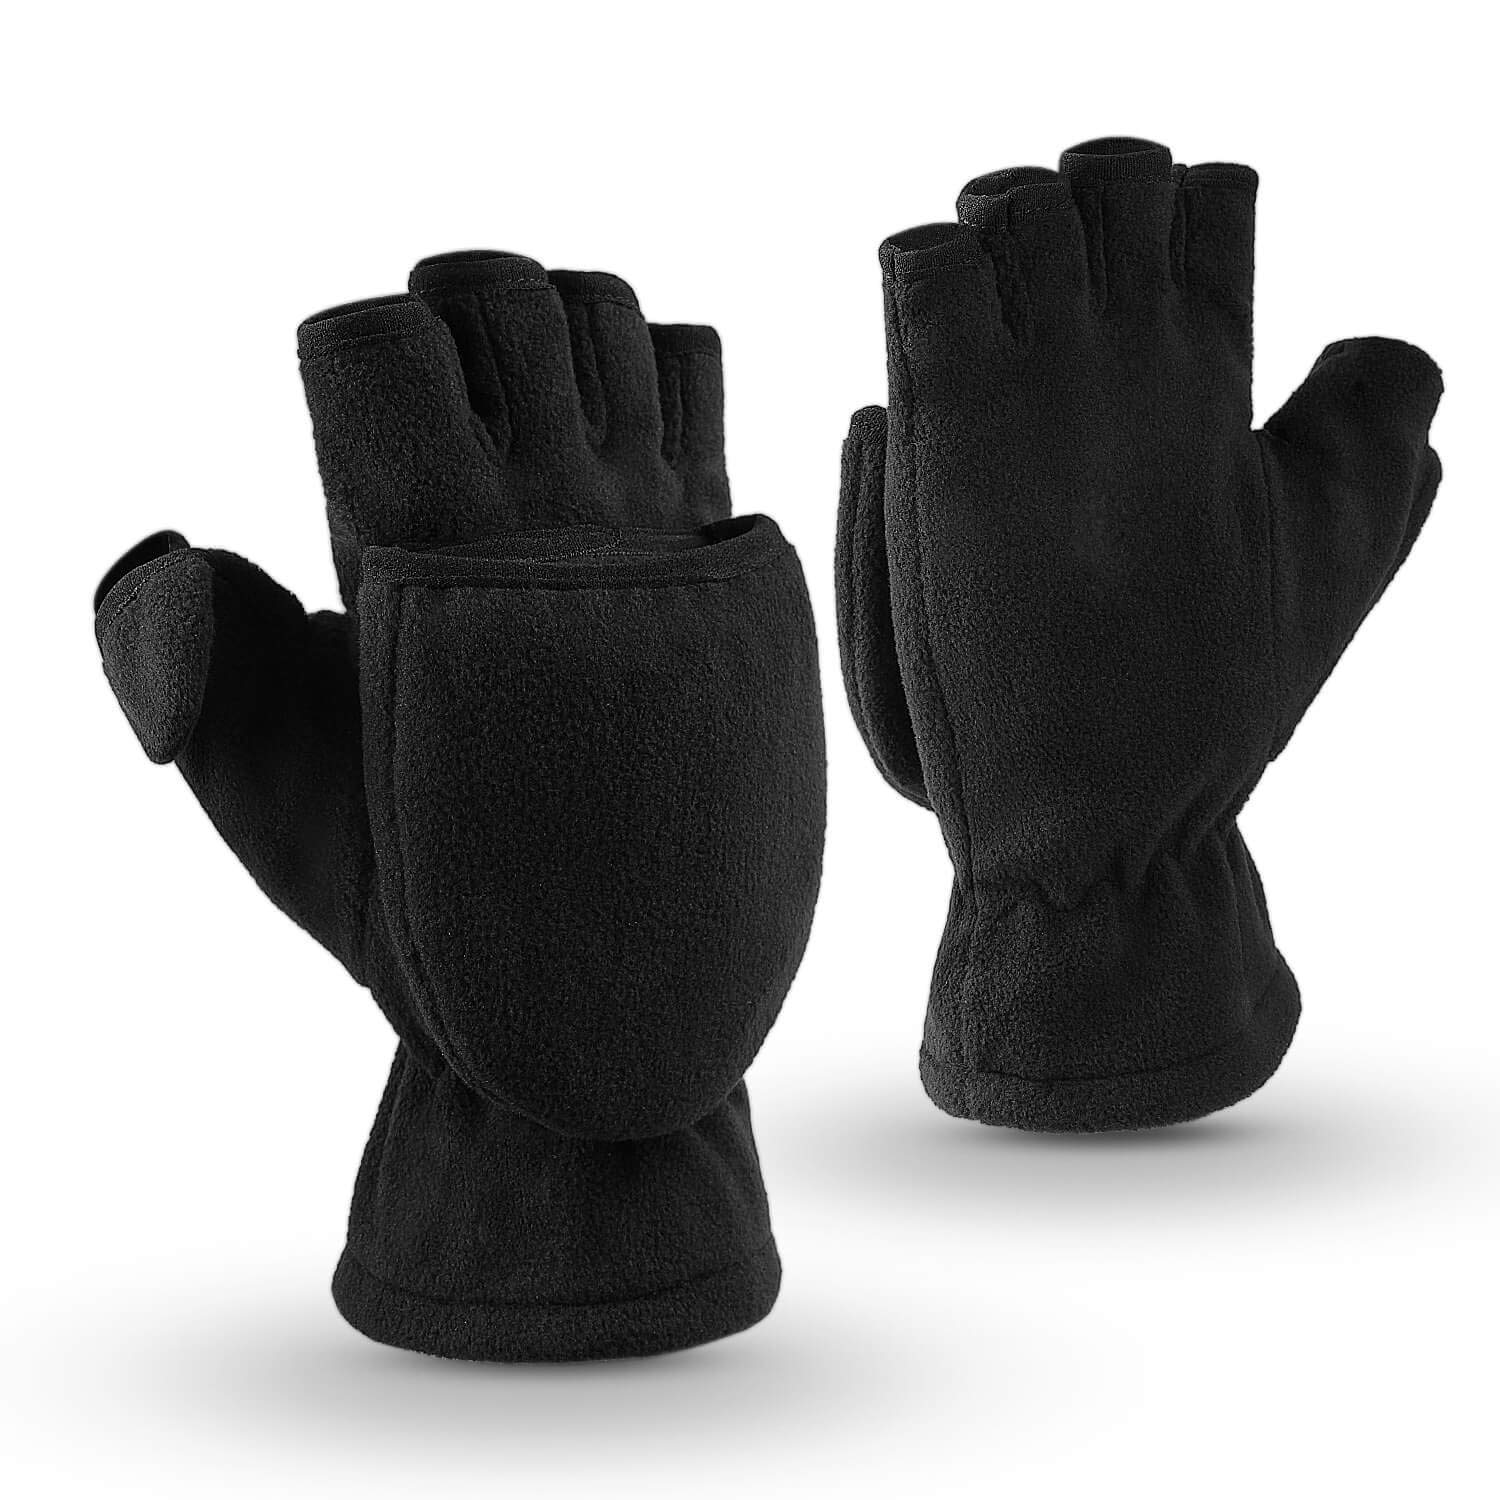 OZERO Winter Warm Women's Cycling Gloves